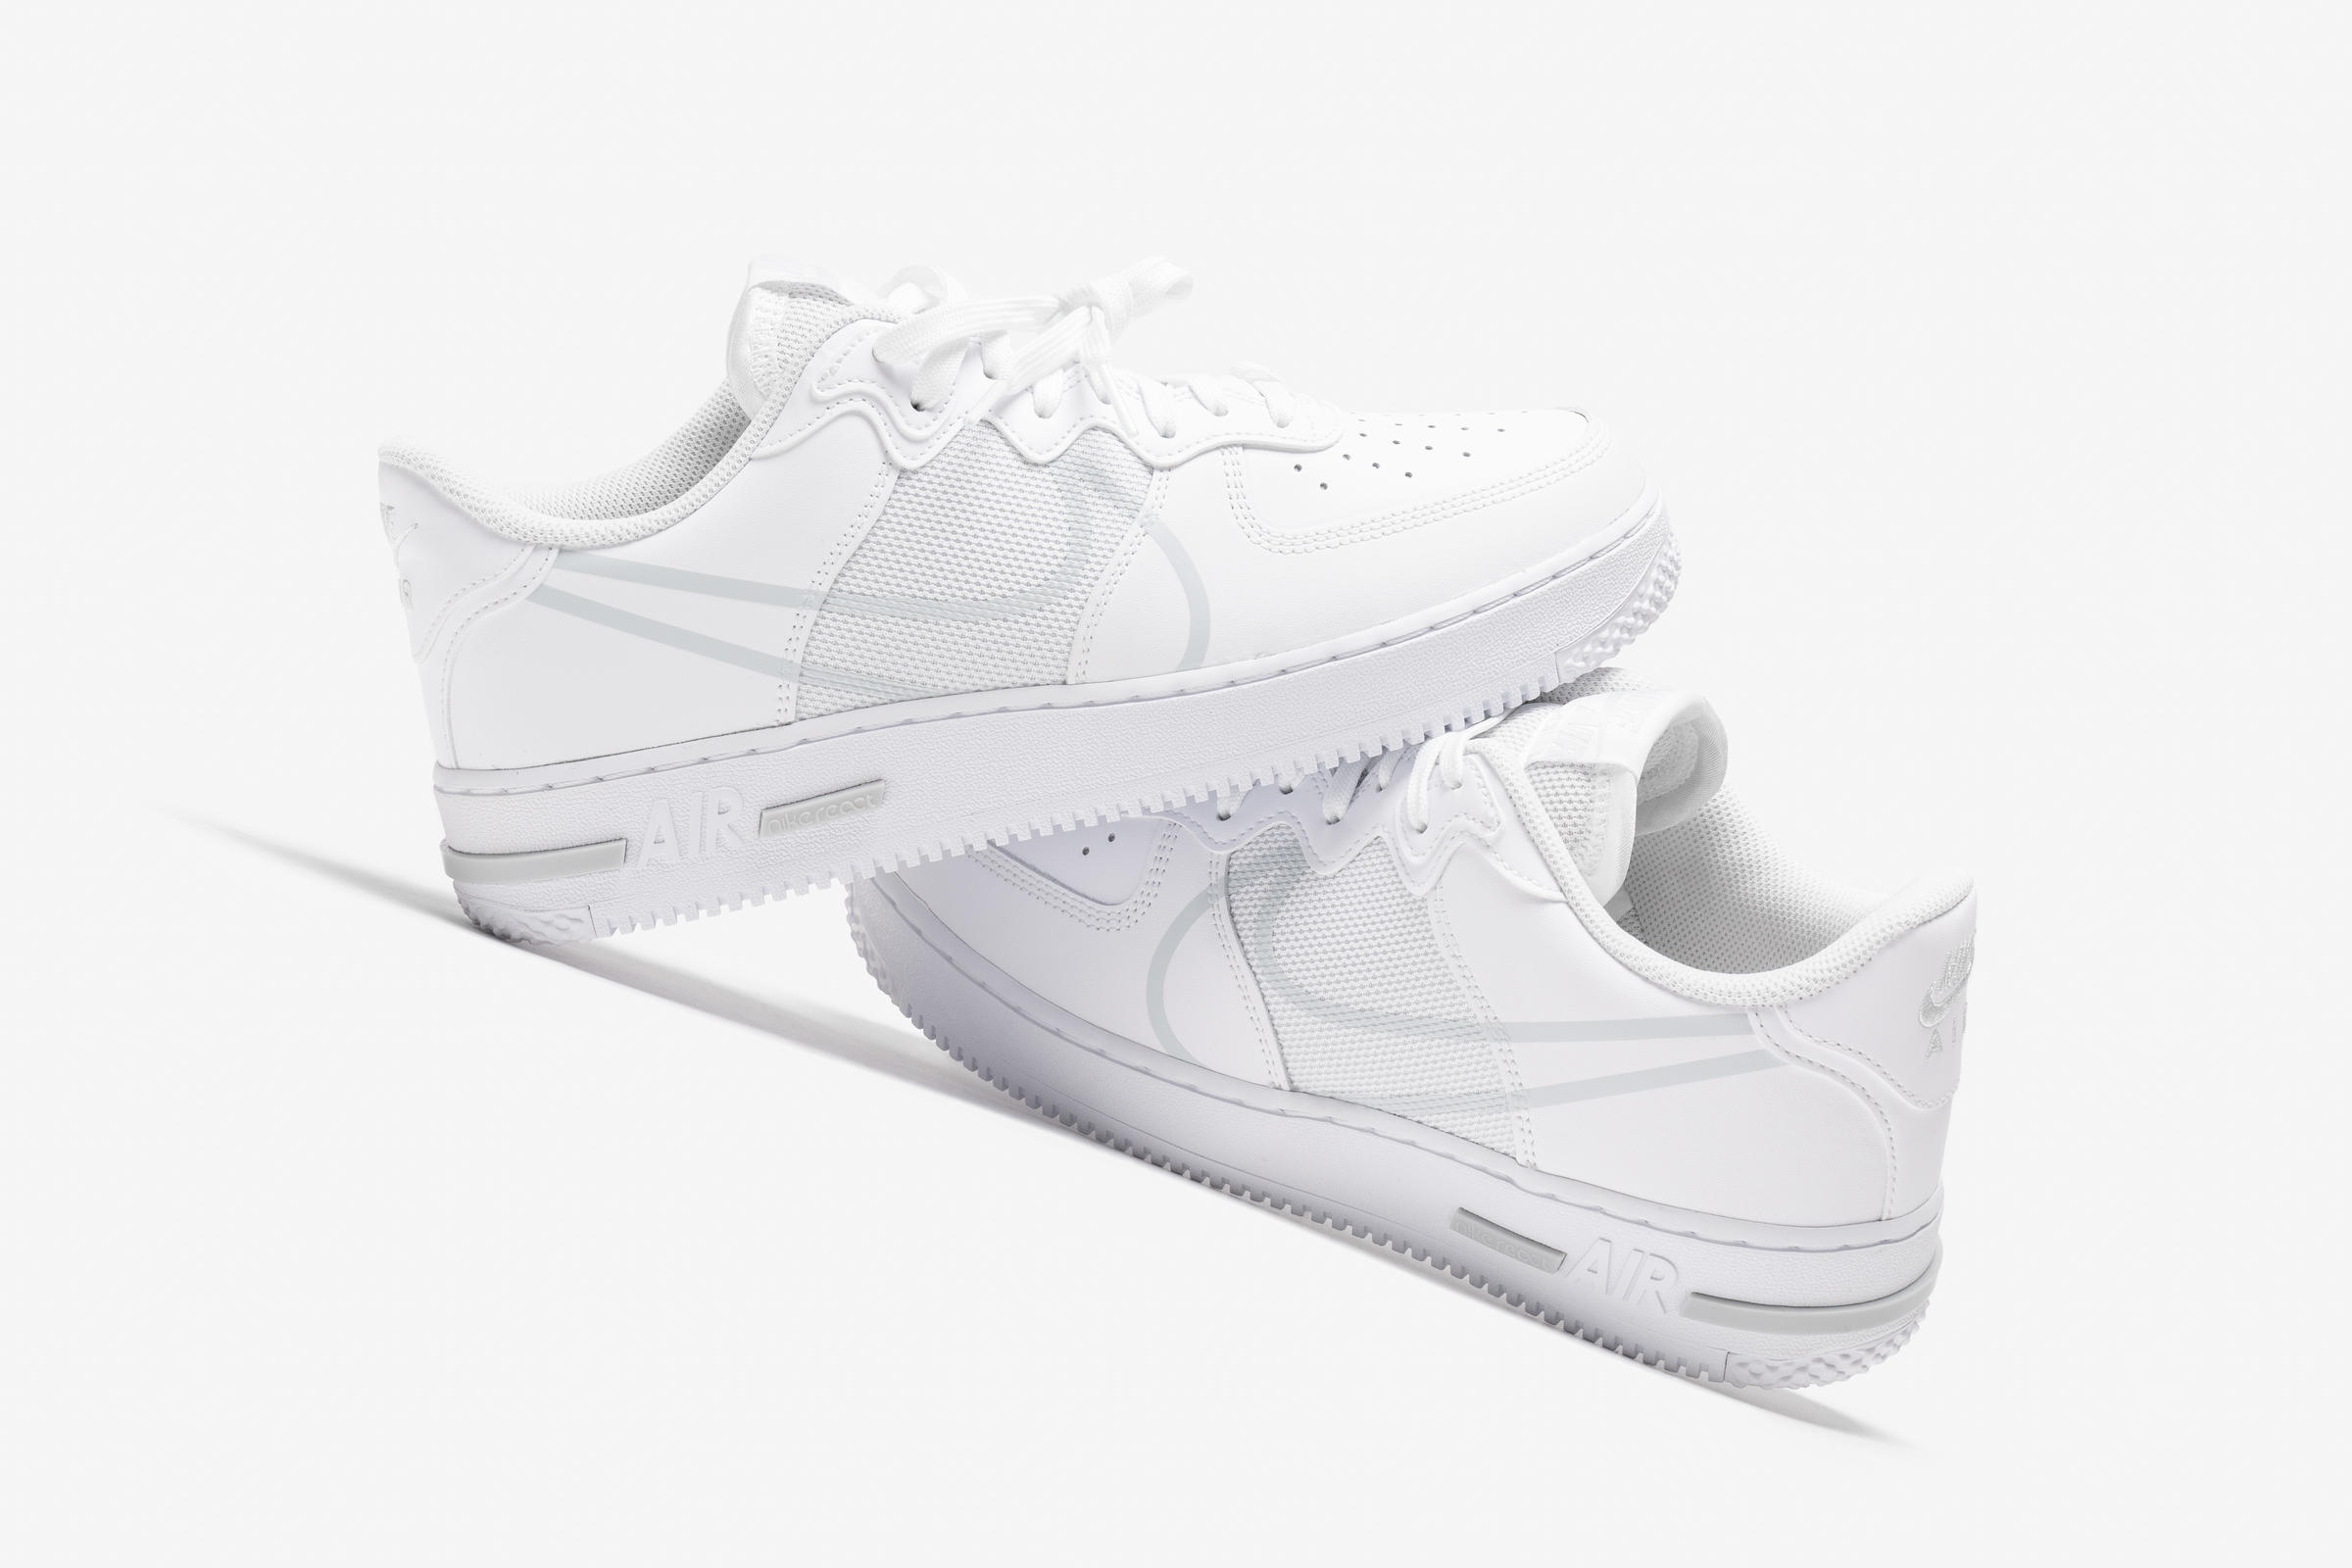 Nike AIR FORCE 1 REACT "WHITE"